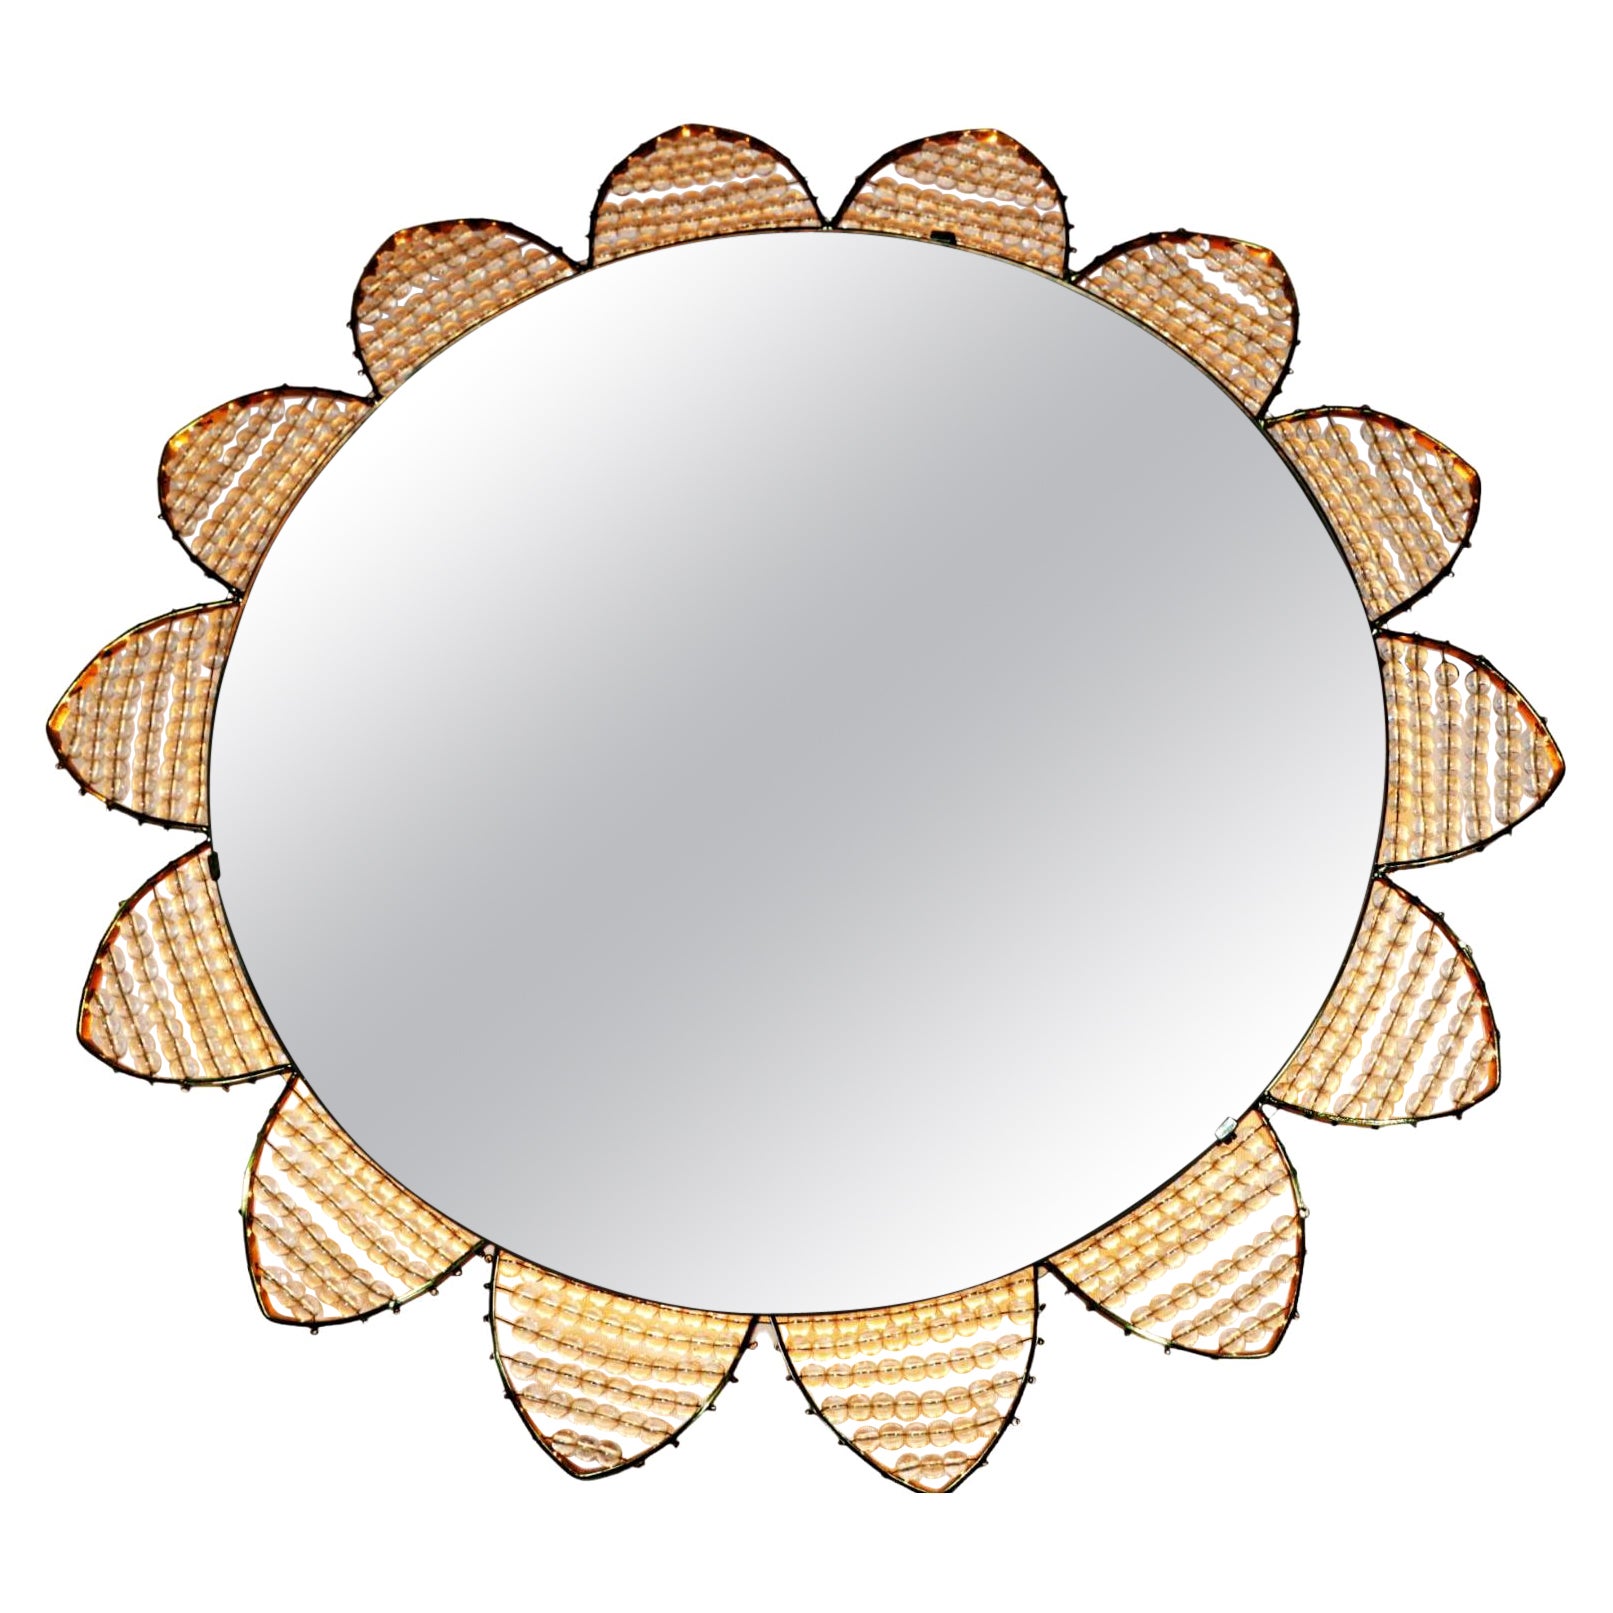 Mirror Decorative Illuminated, Sunburst or Flower Design, Pearls, 1970